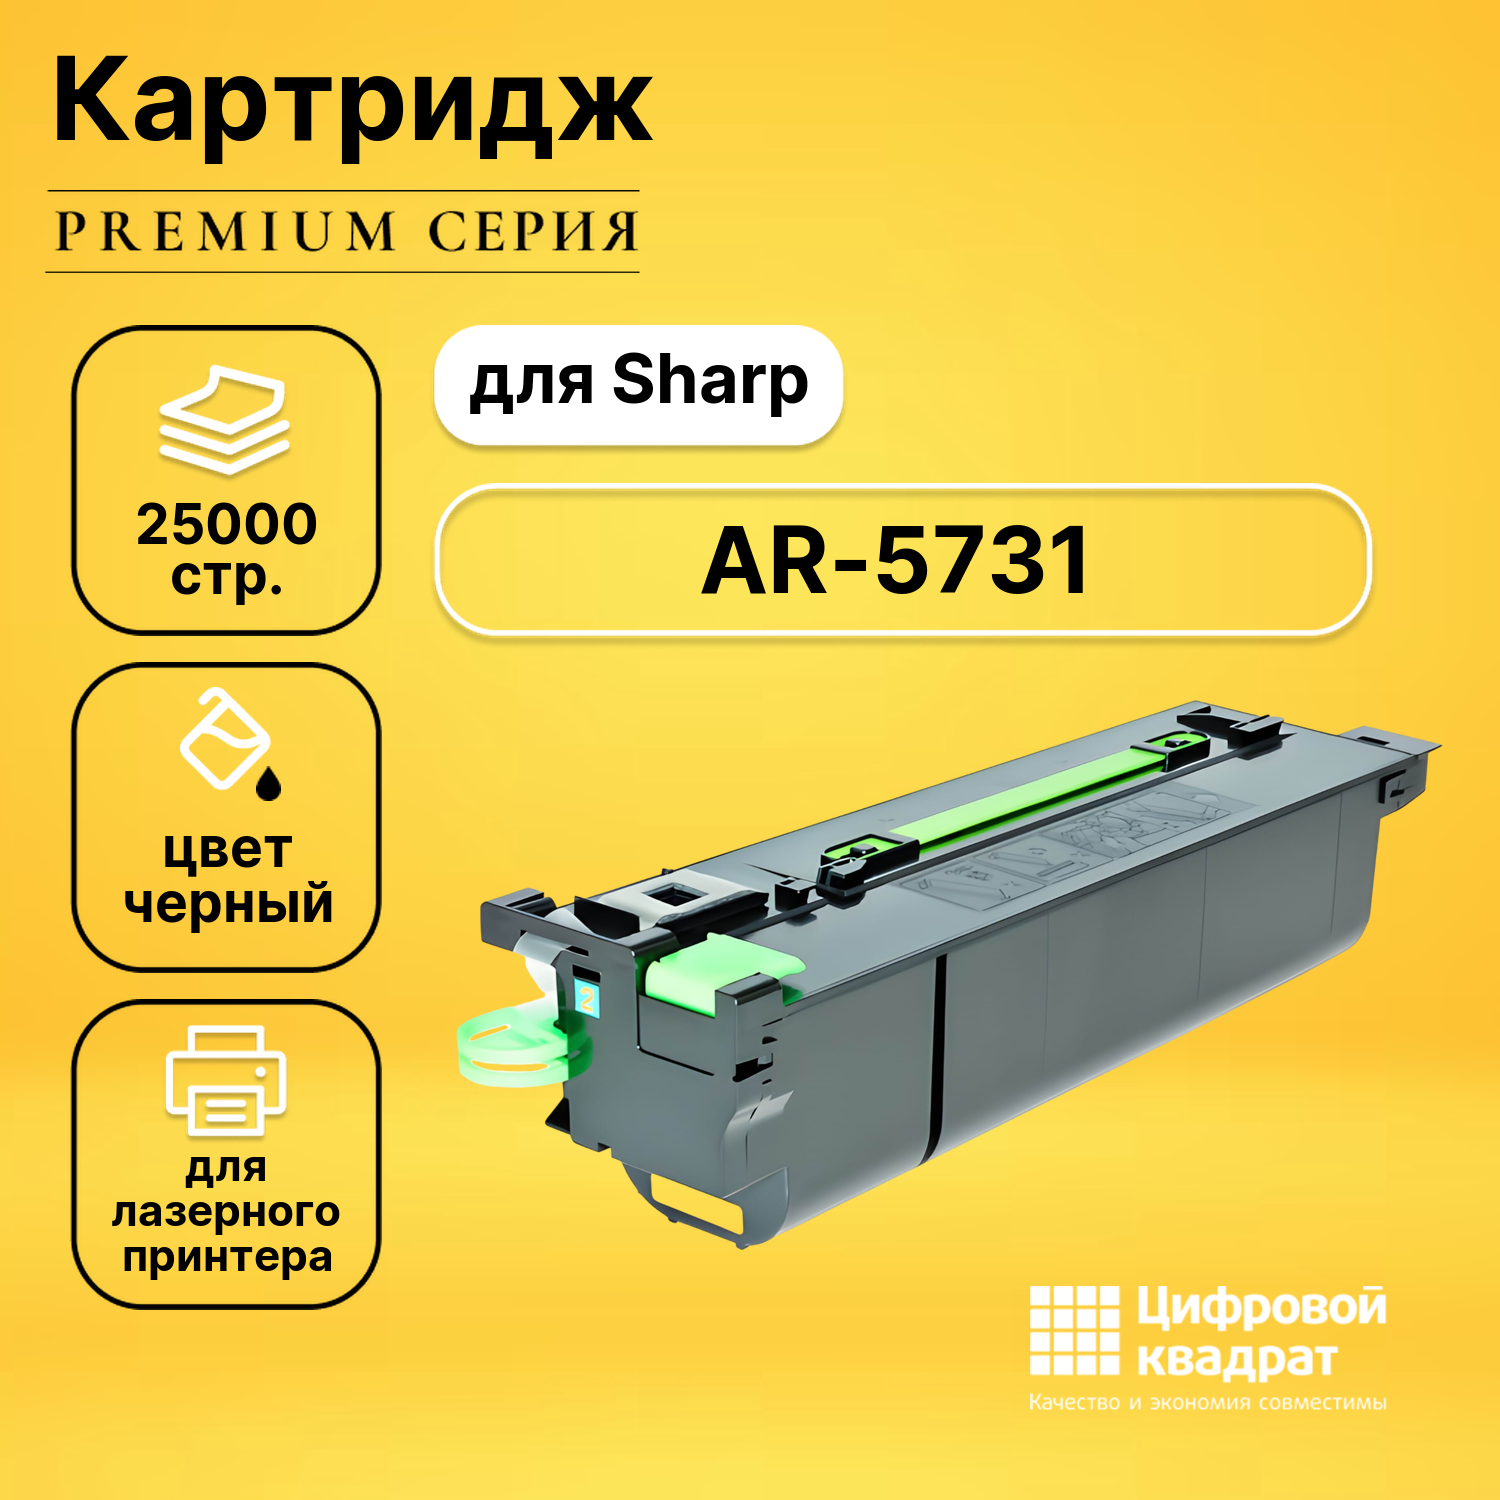 Картридж DS для Sharp AR-5731 совместимый